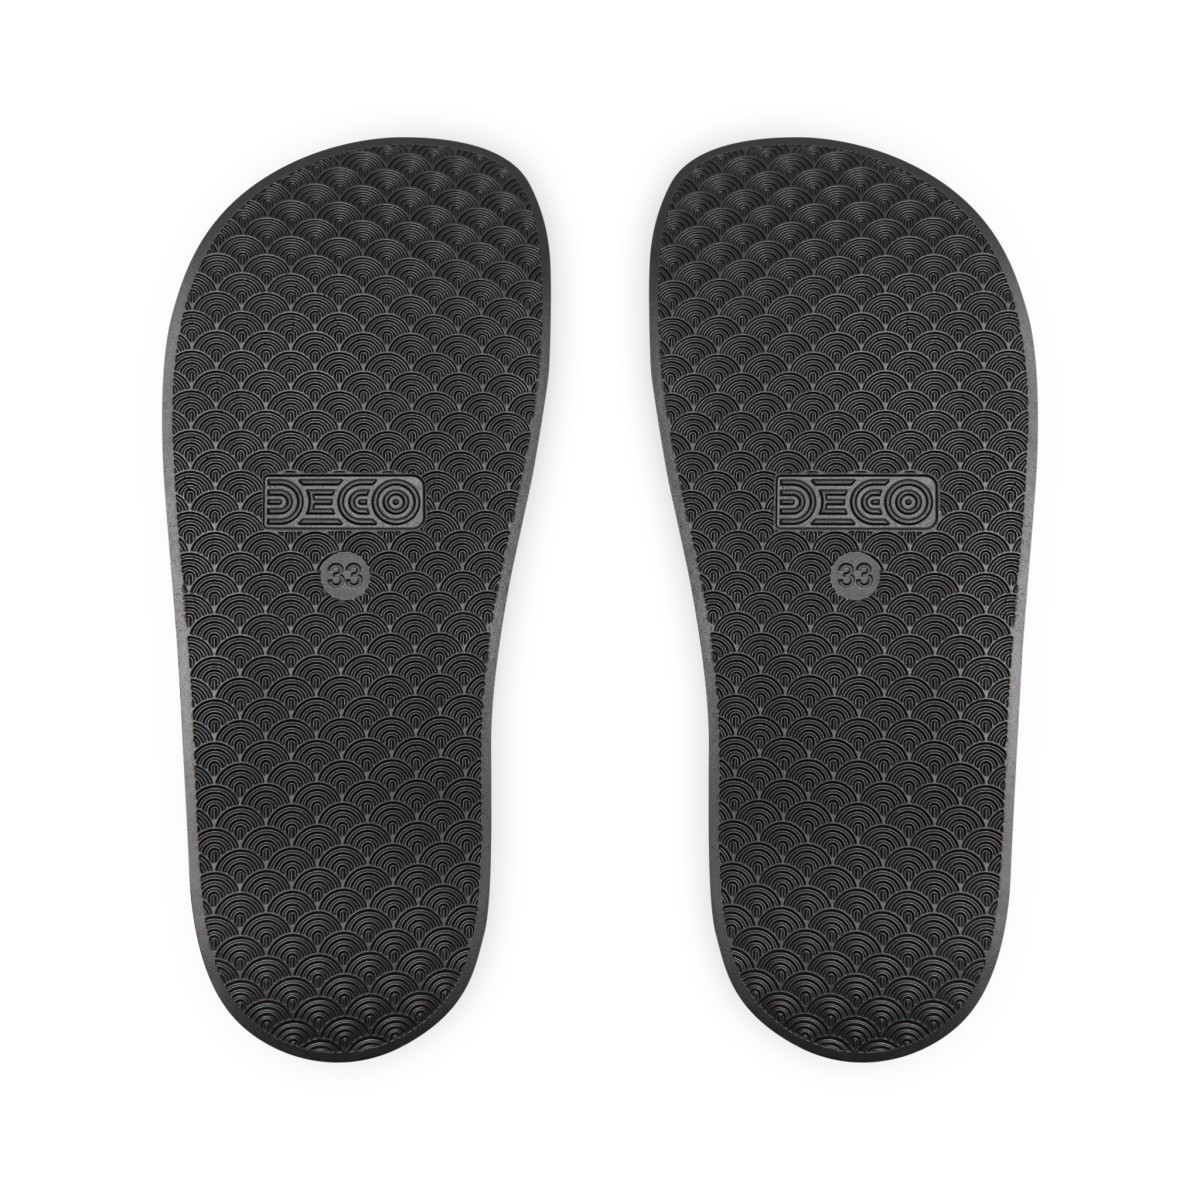 Dallah Radio Youth Black PU Slide Sandals product thumbnail image